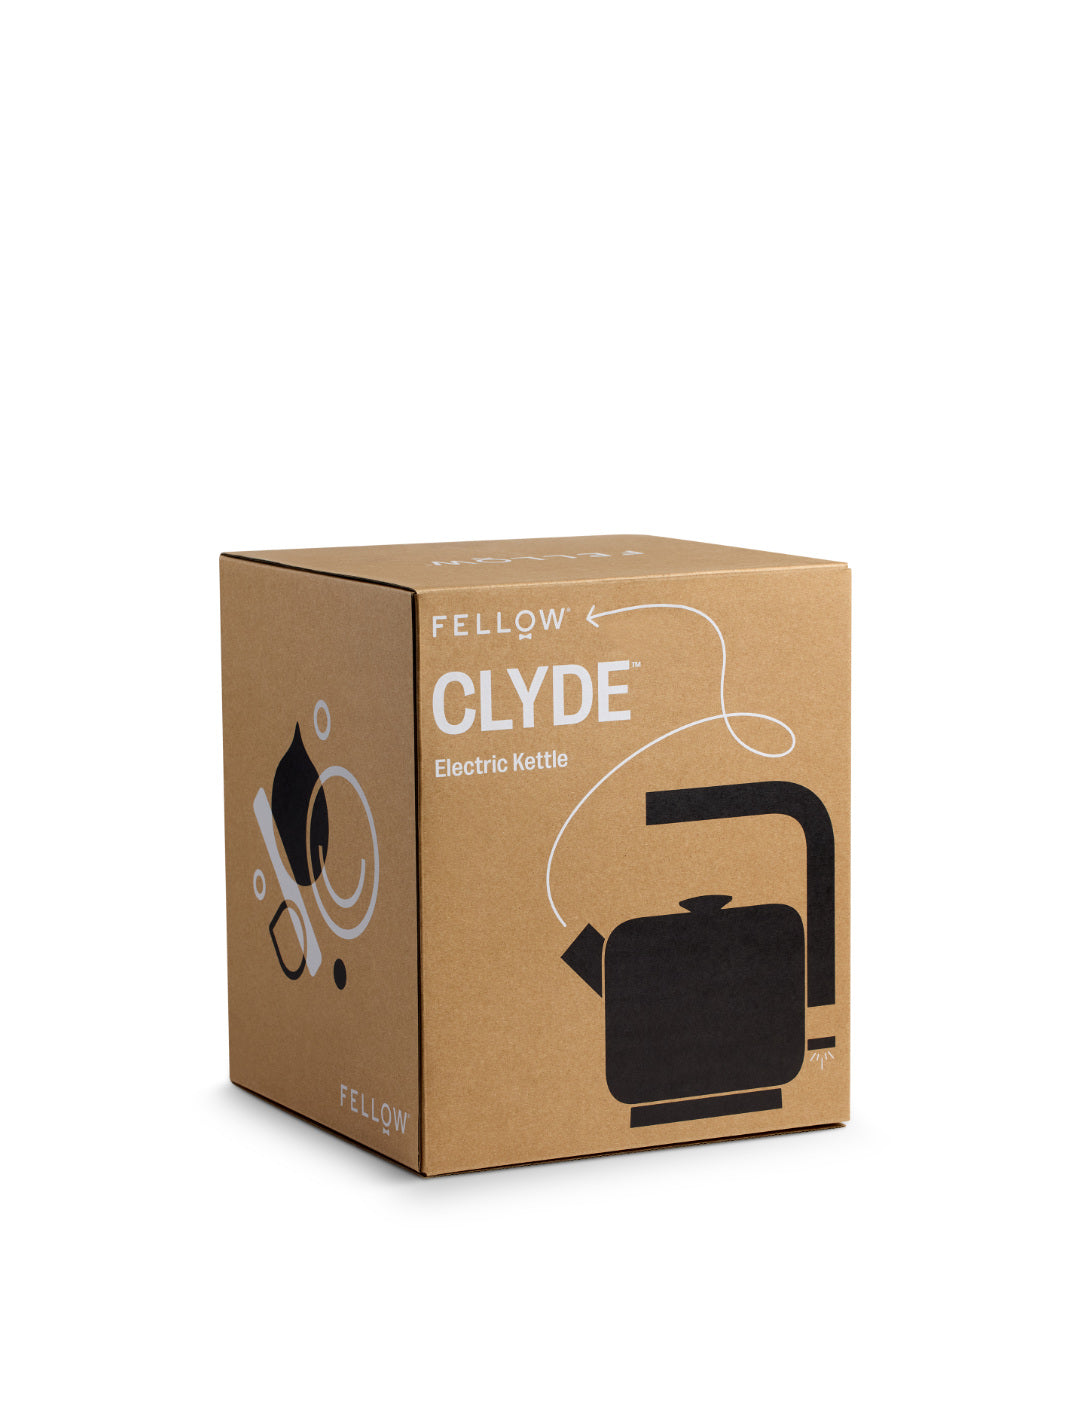 FELLOW Clyde Electric Kettle (120V) (1500ml/50oz)